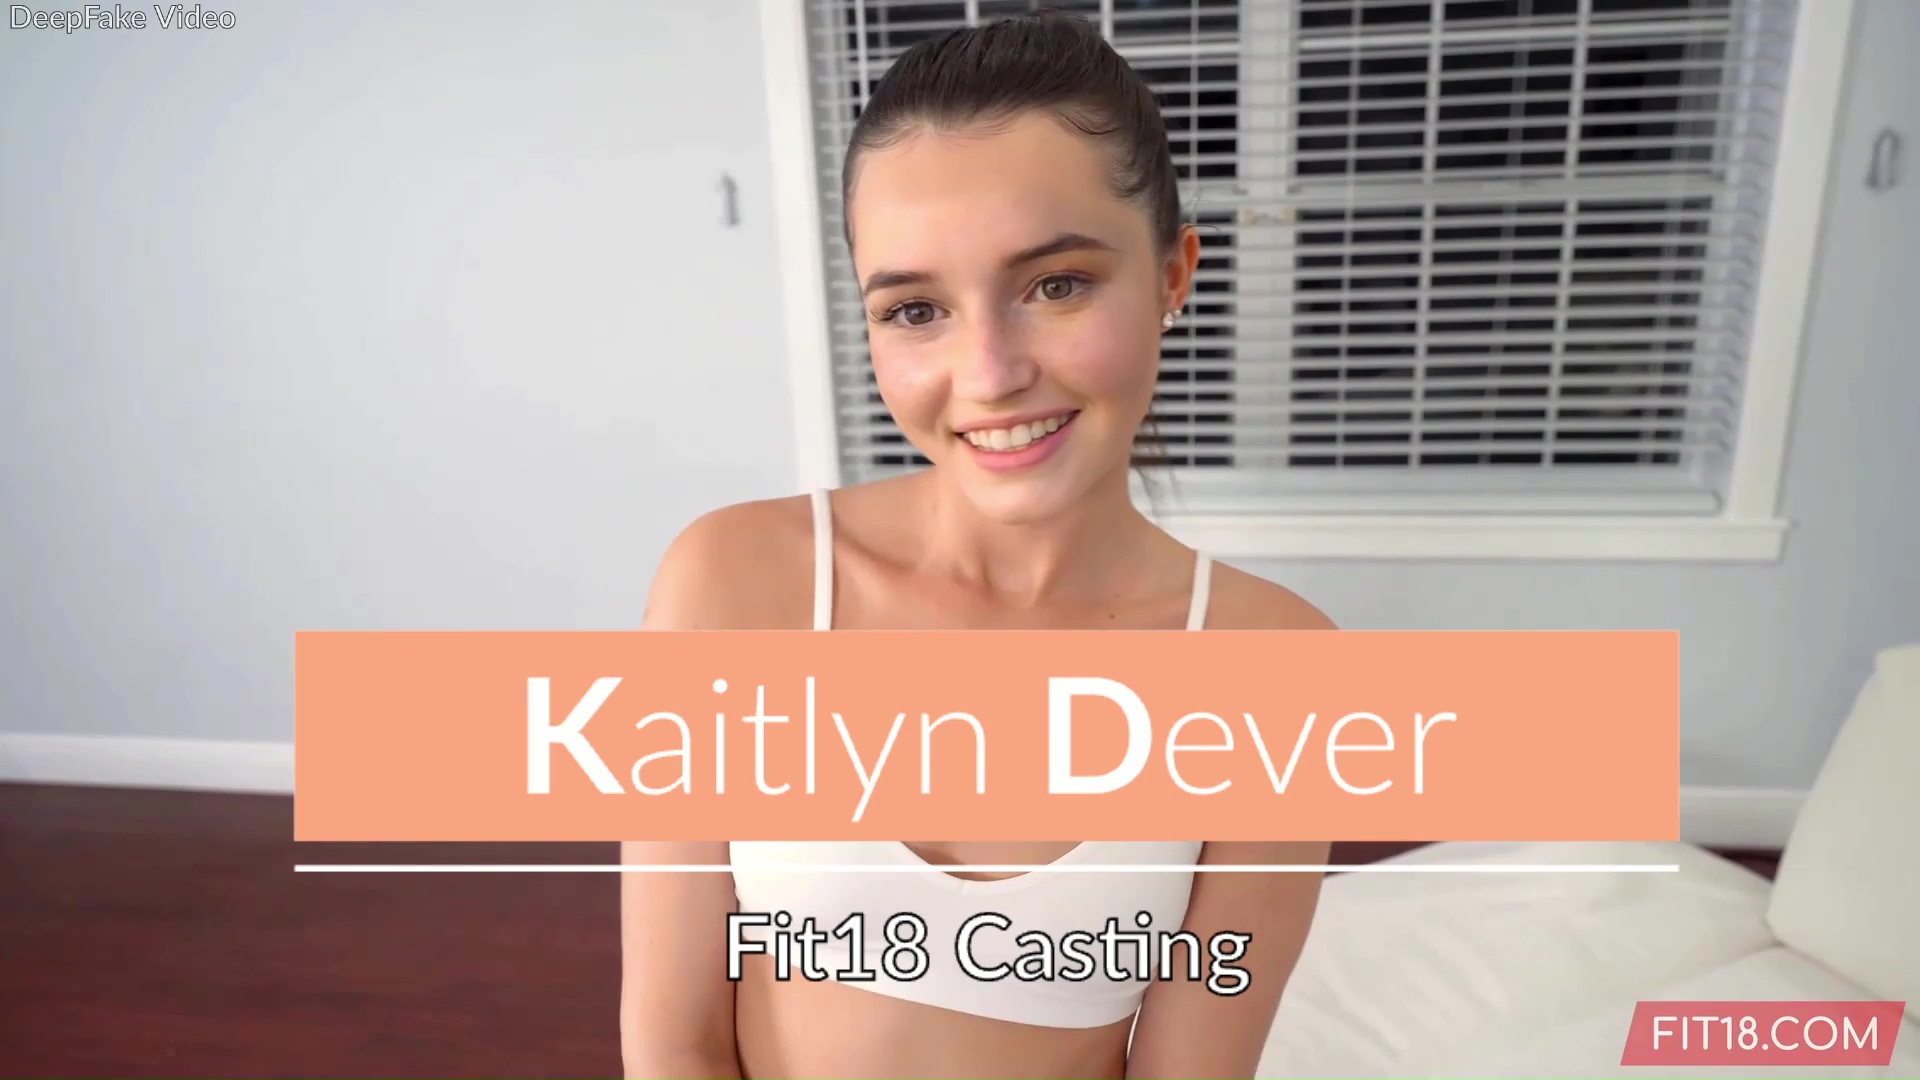 Kaitlyn Dever - Fit18 Casting - Trailer